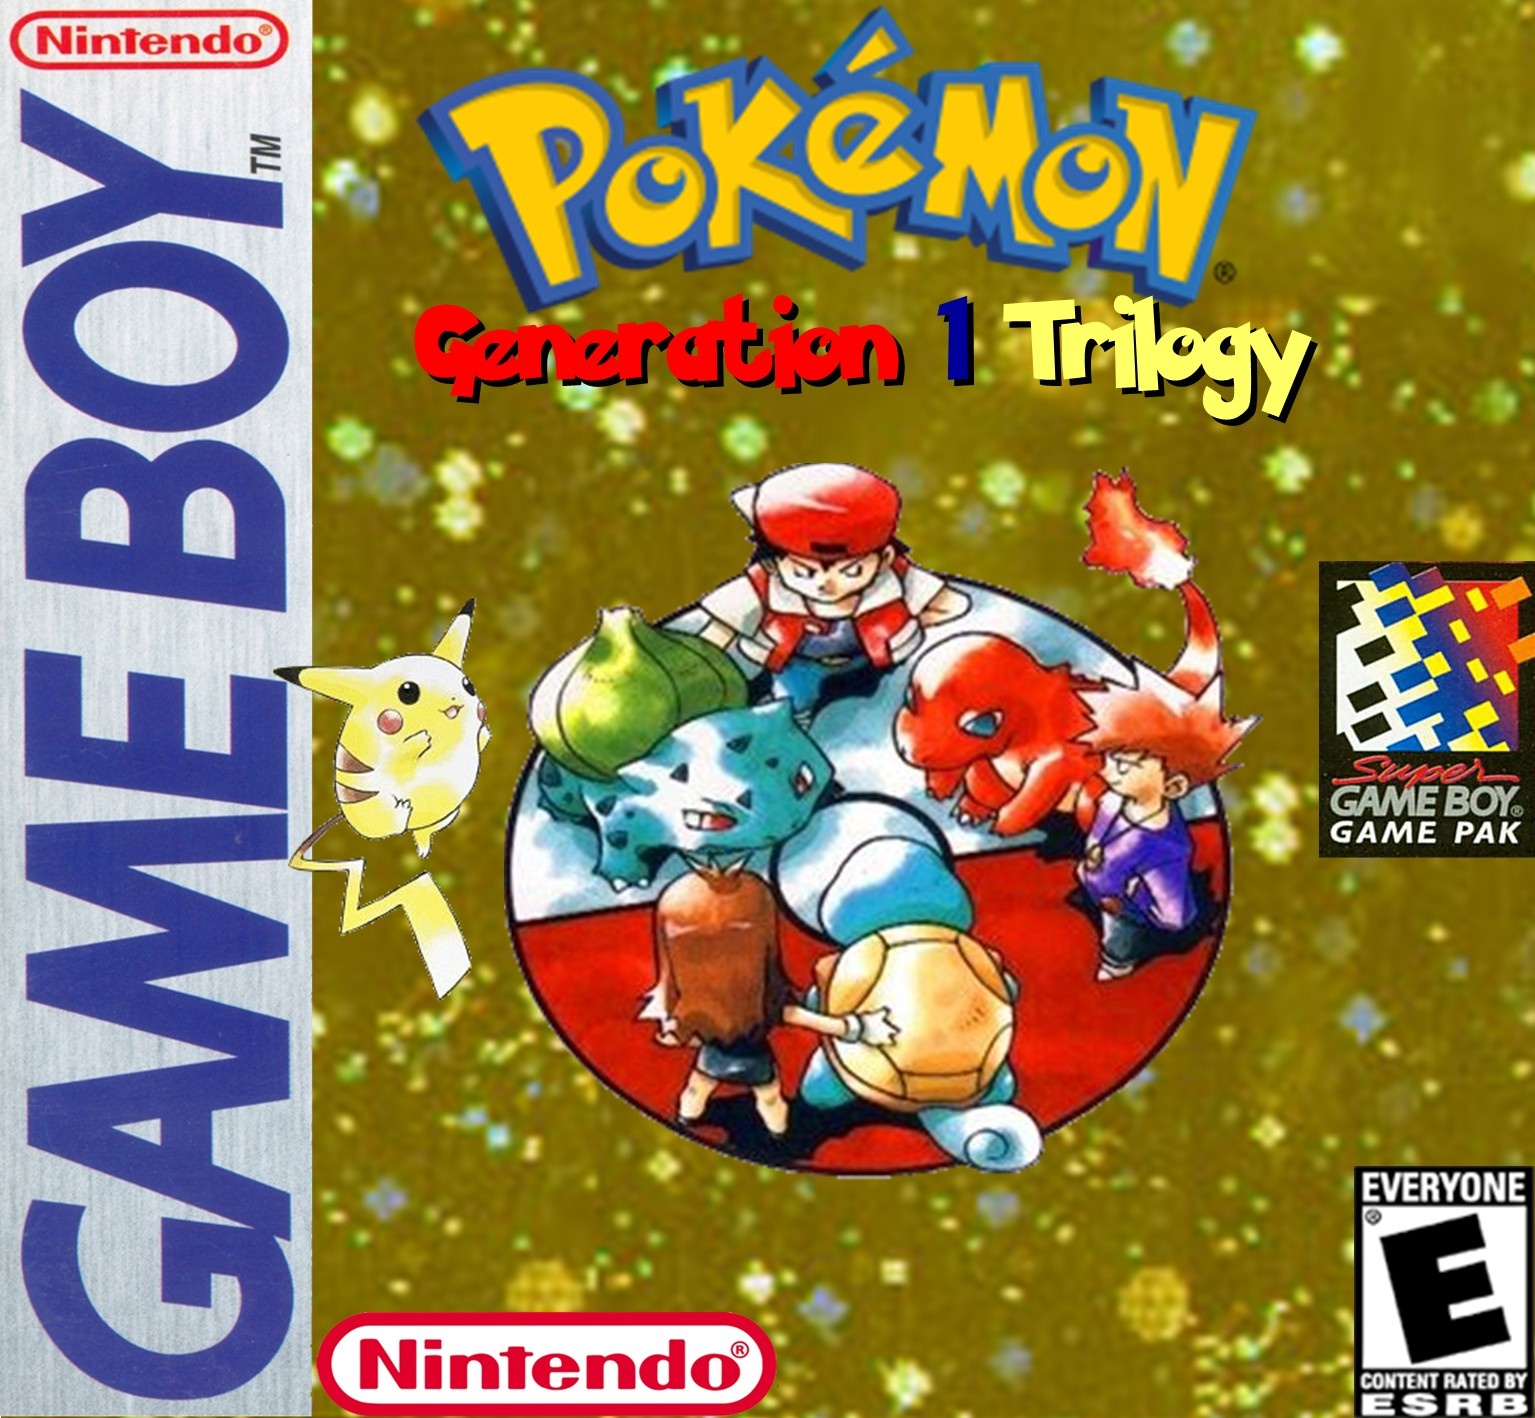 Pokemon Generation 1 Trilogy box cover